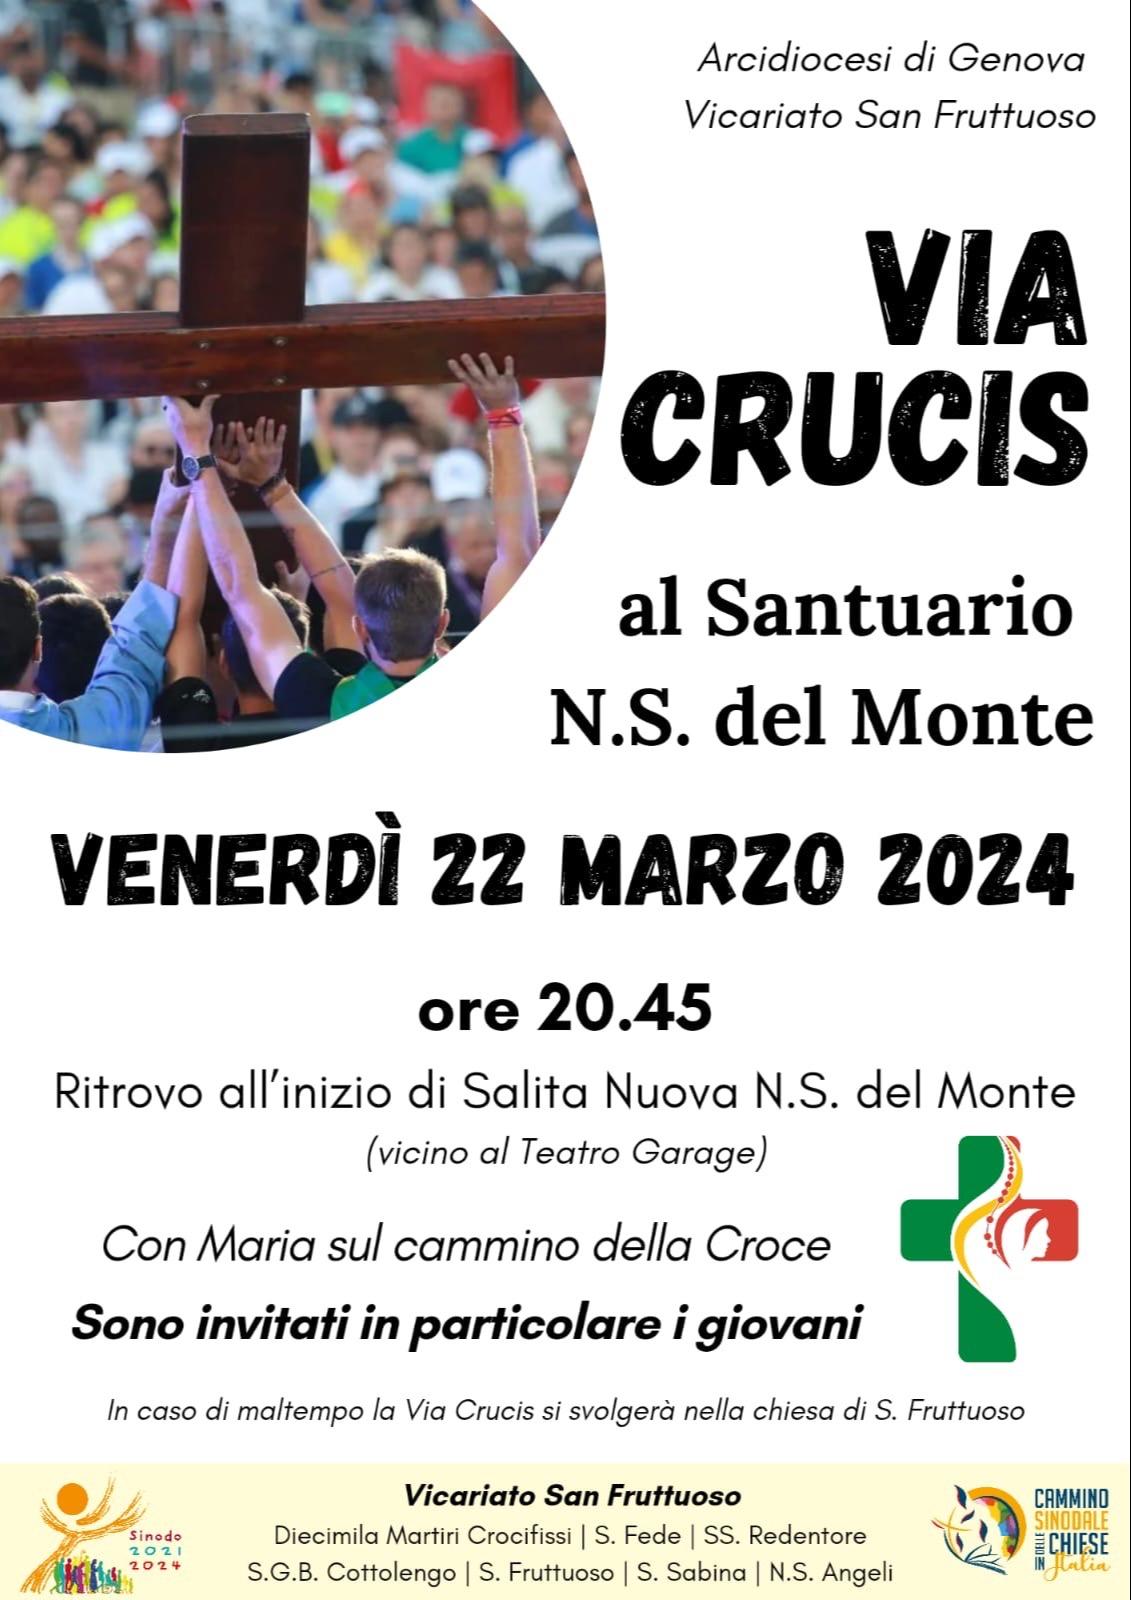 Via Crucis vicariale giovanile - Venerdì 22 Marzo 2024